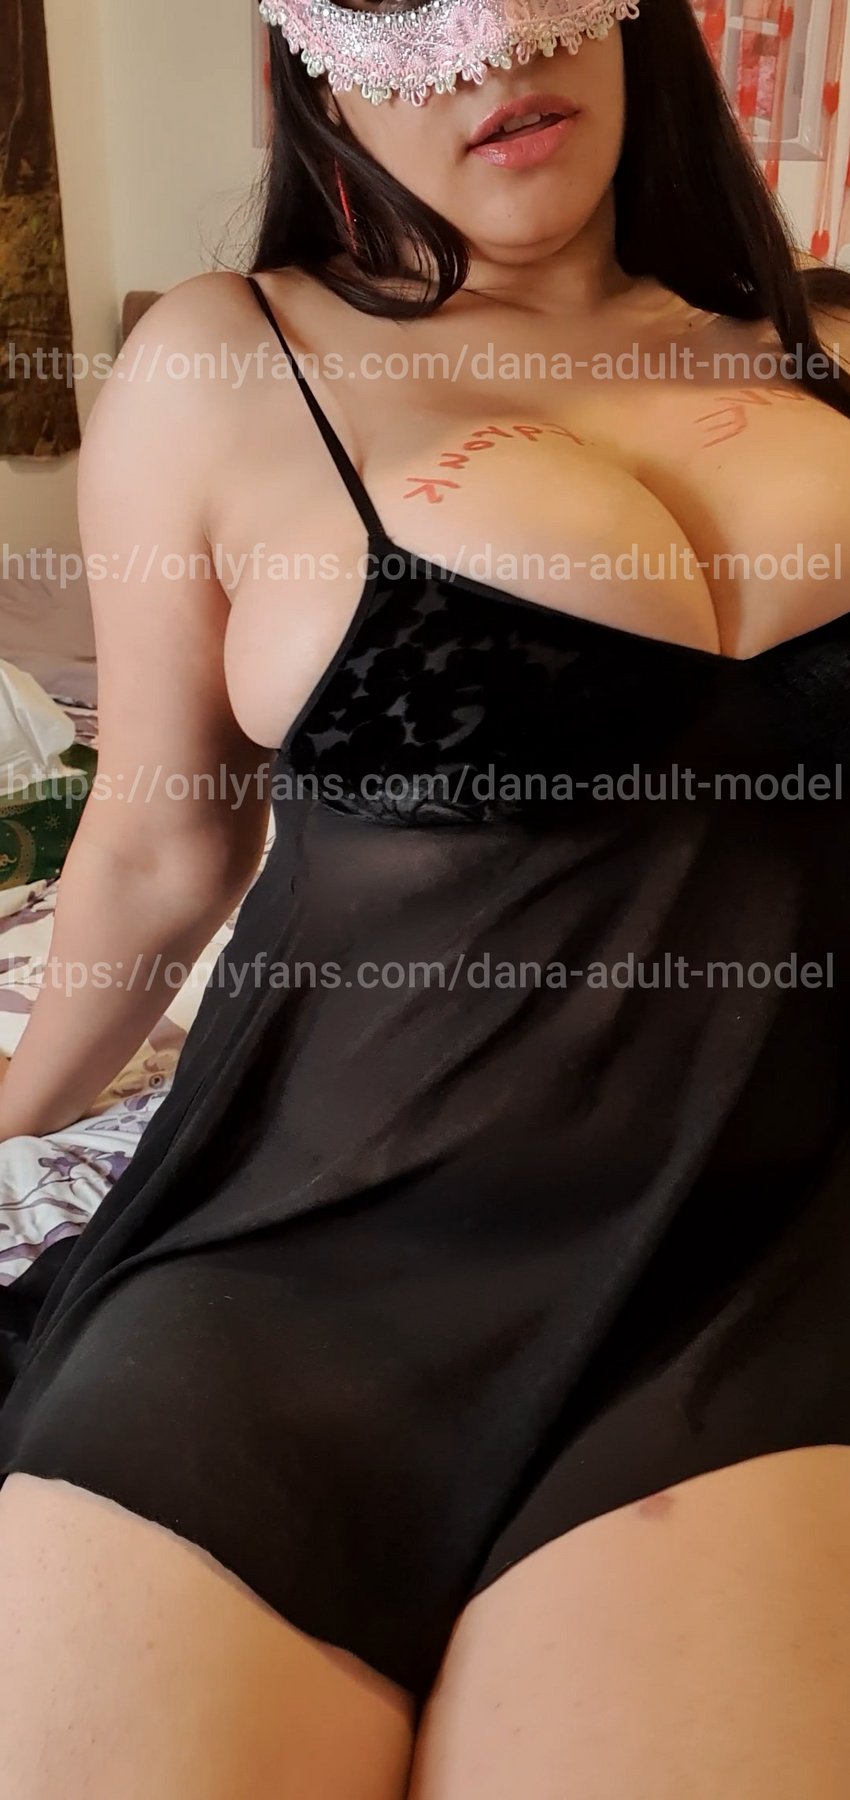 Onlyfans dana-adult-model